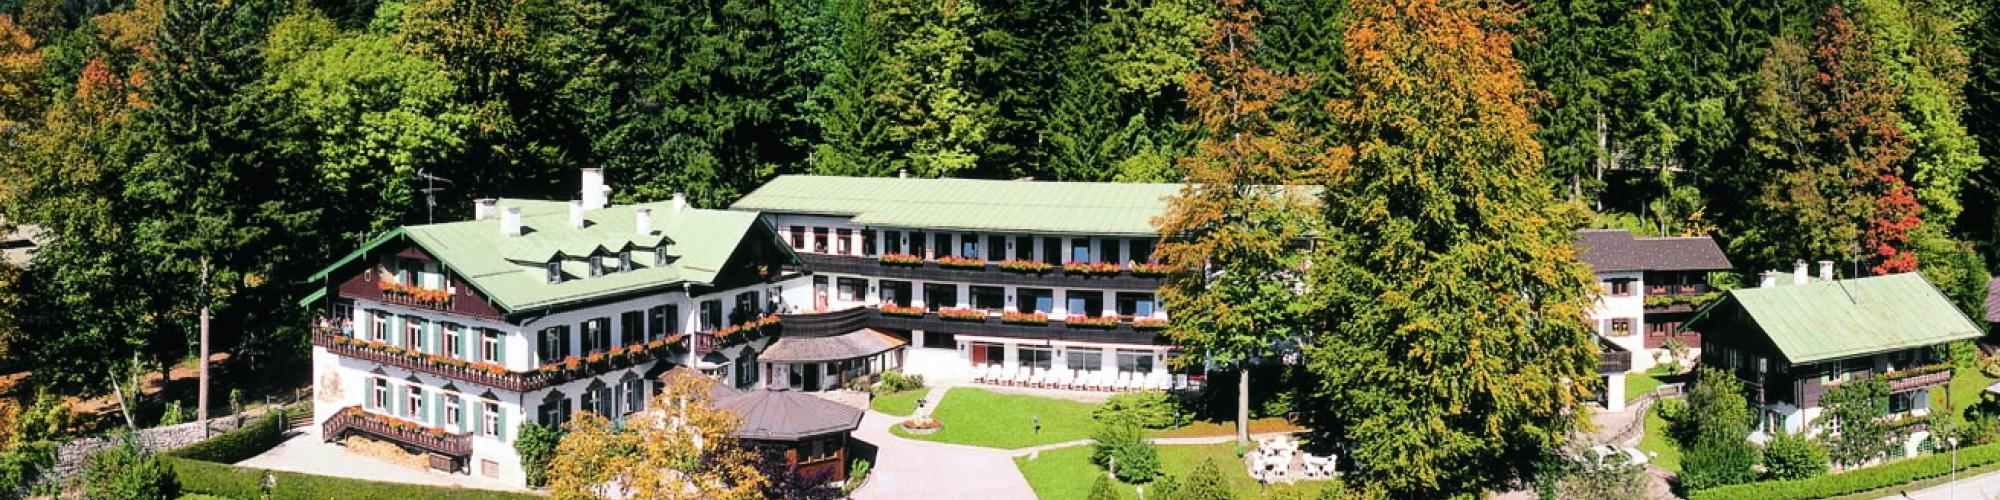 Klinik Schönsicht Berchtesgaden